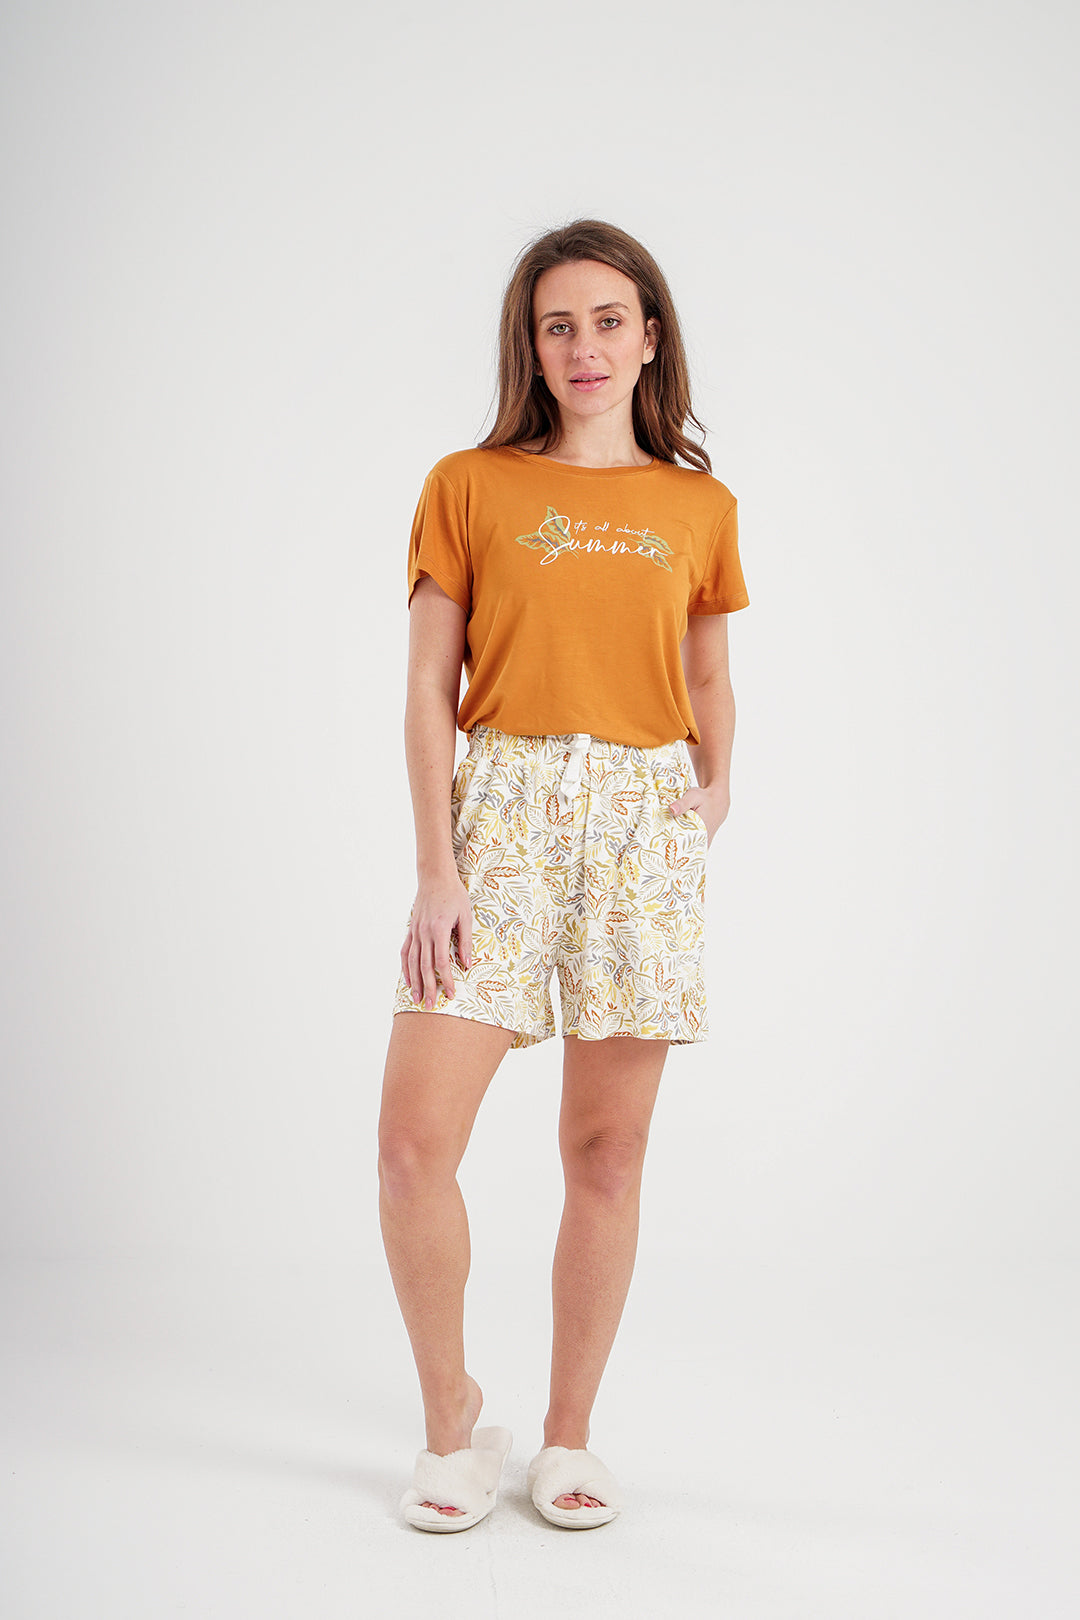 Women's pajama shorts with print